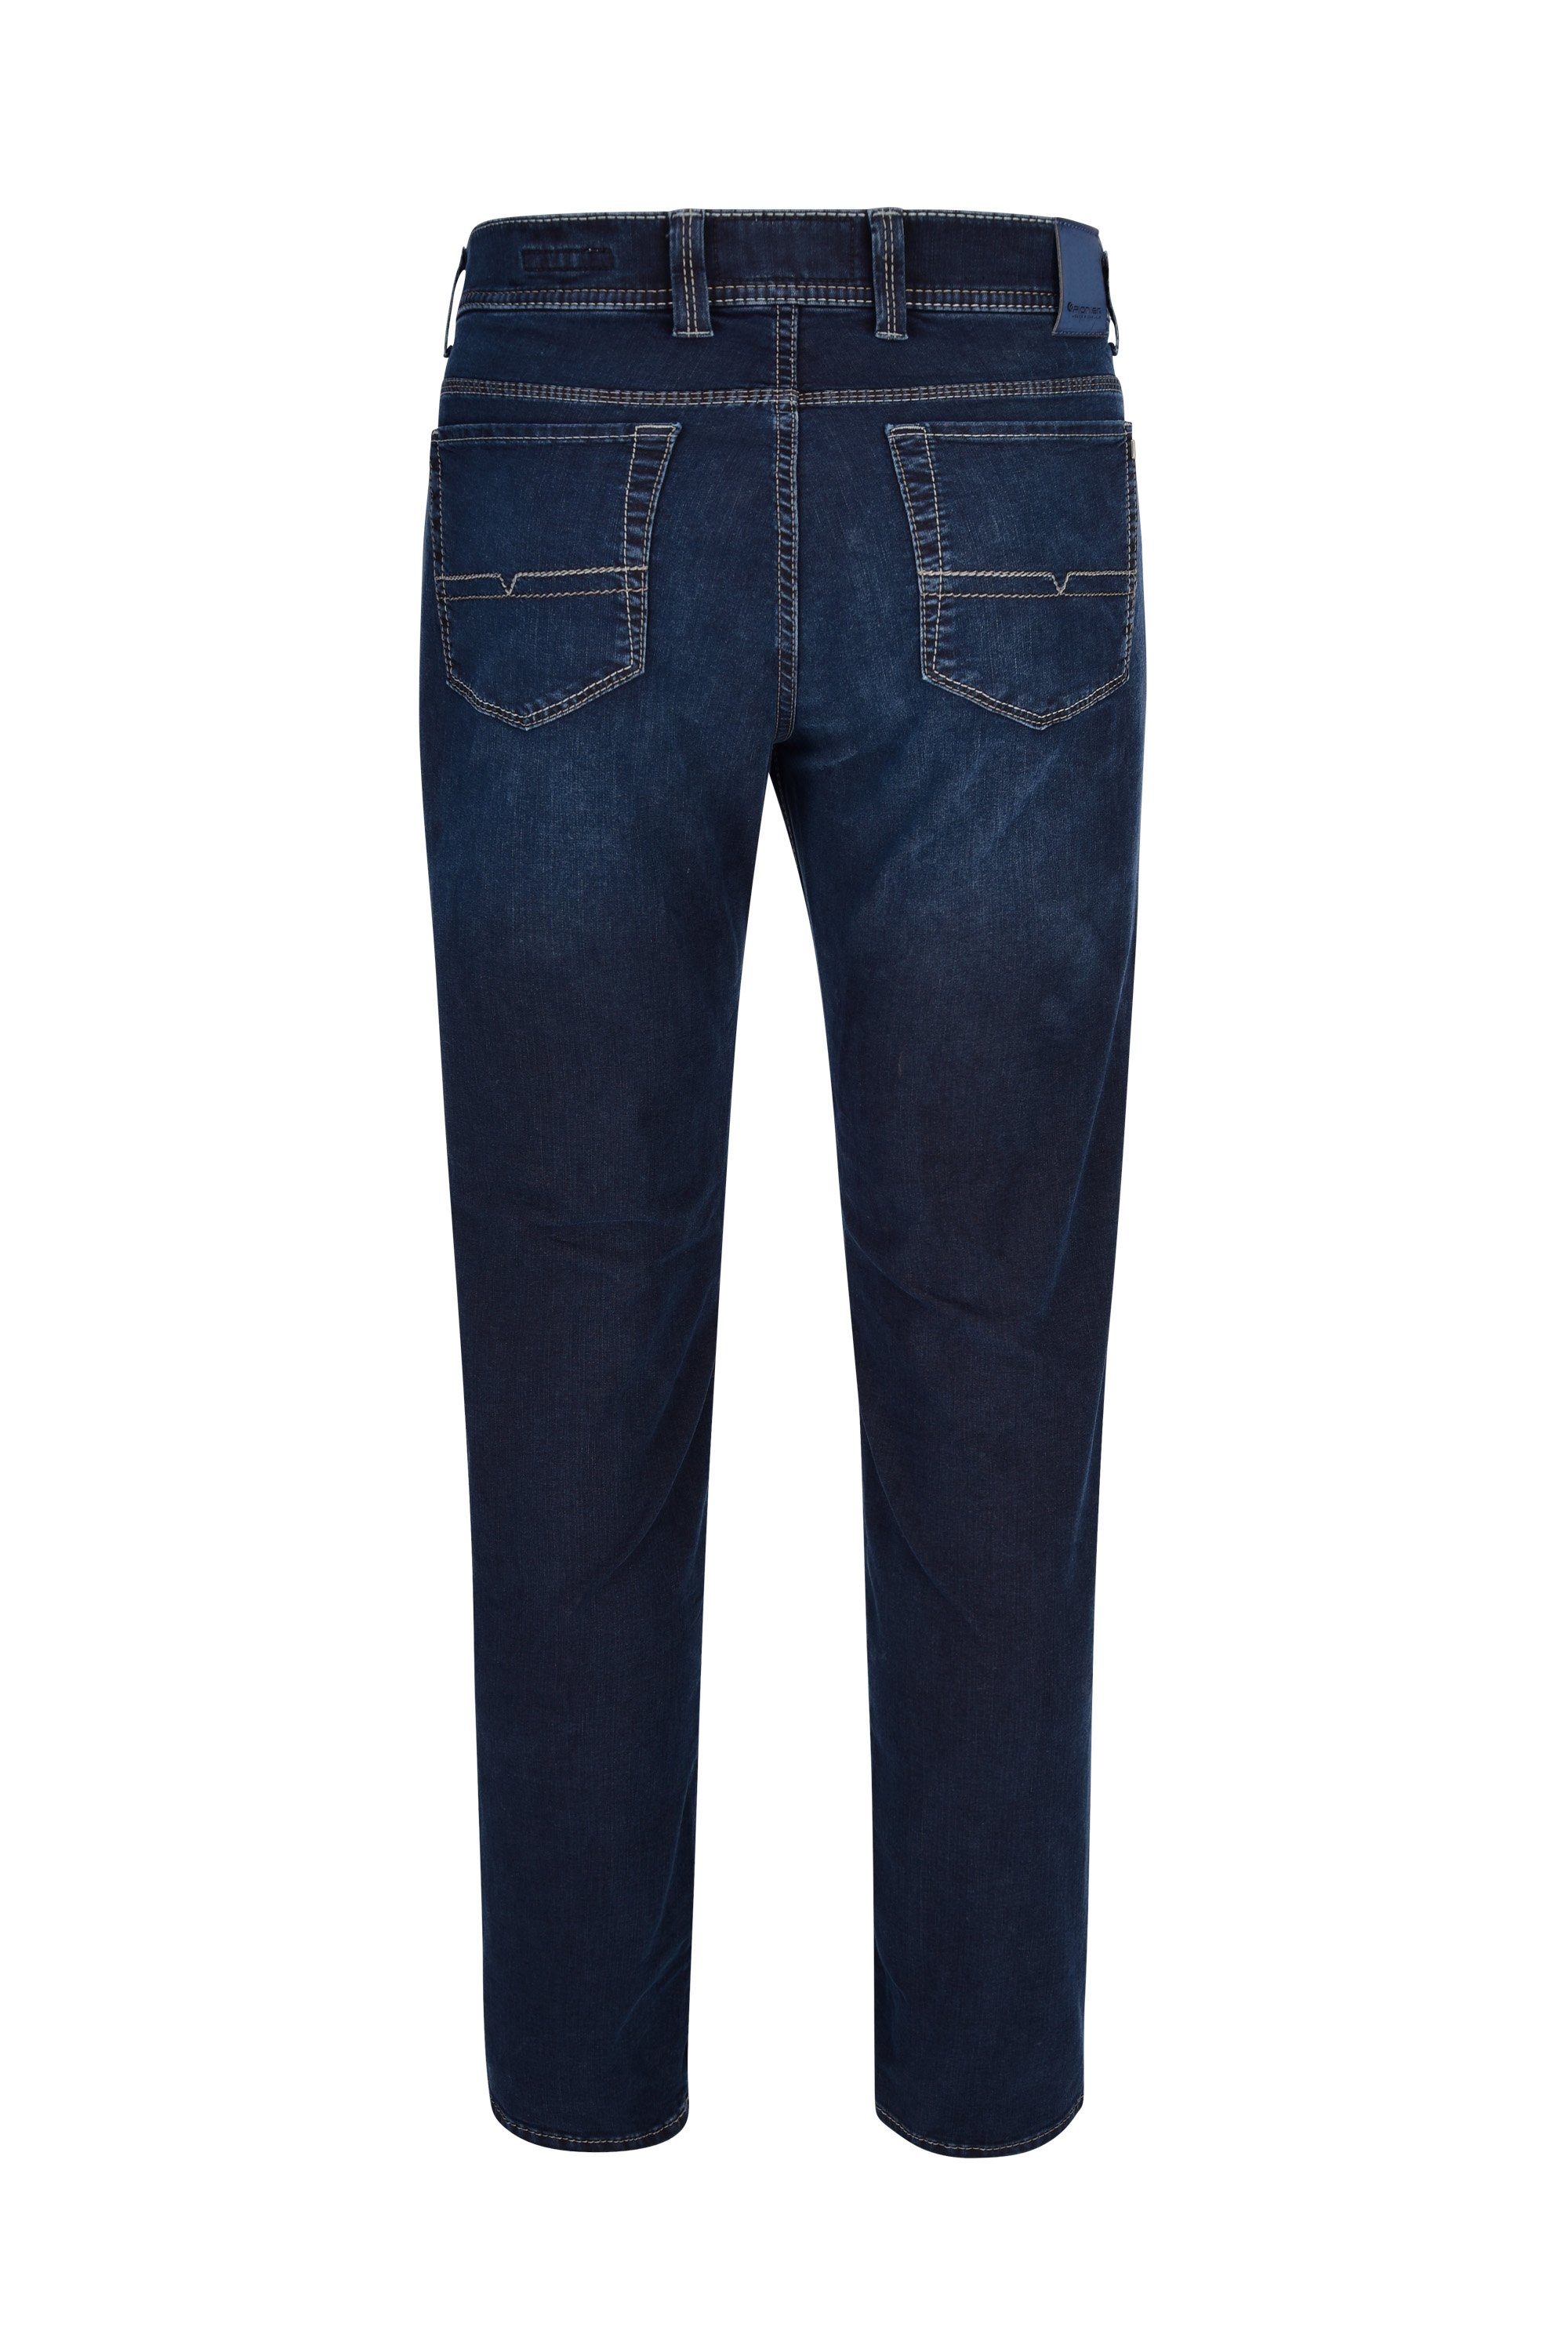 2079 5-Pocket-Jeans dark 6101.665 PIONIER THOMAS blue Pionier